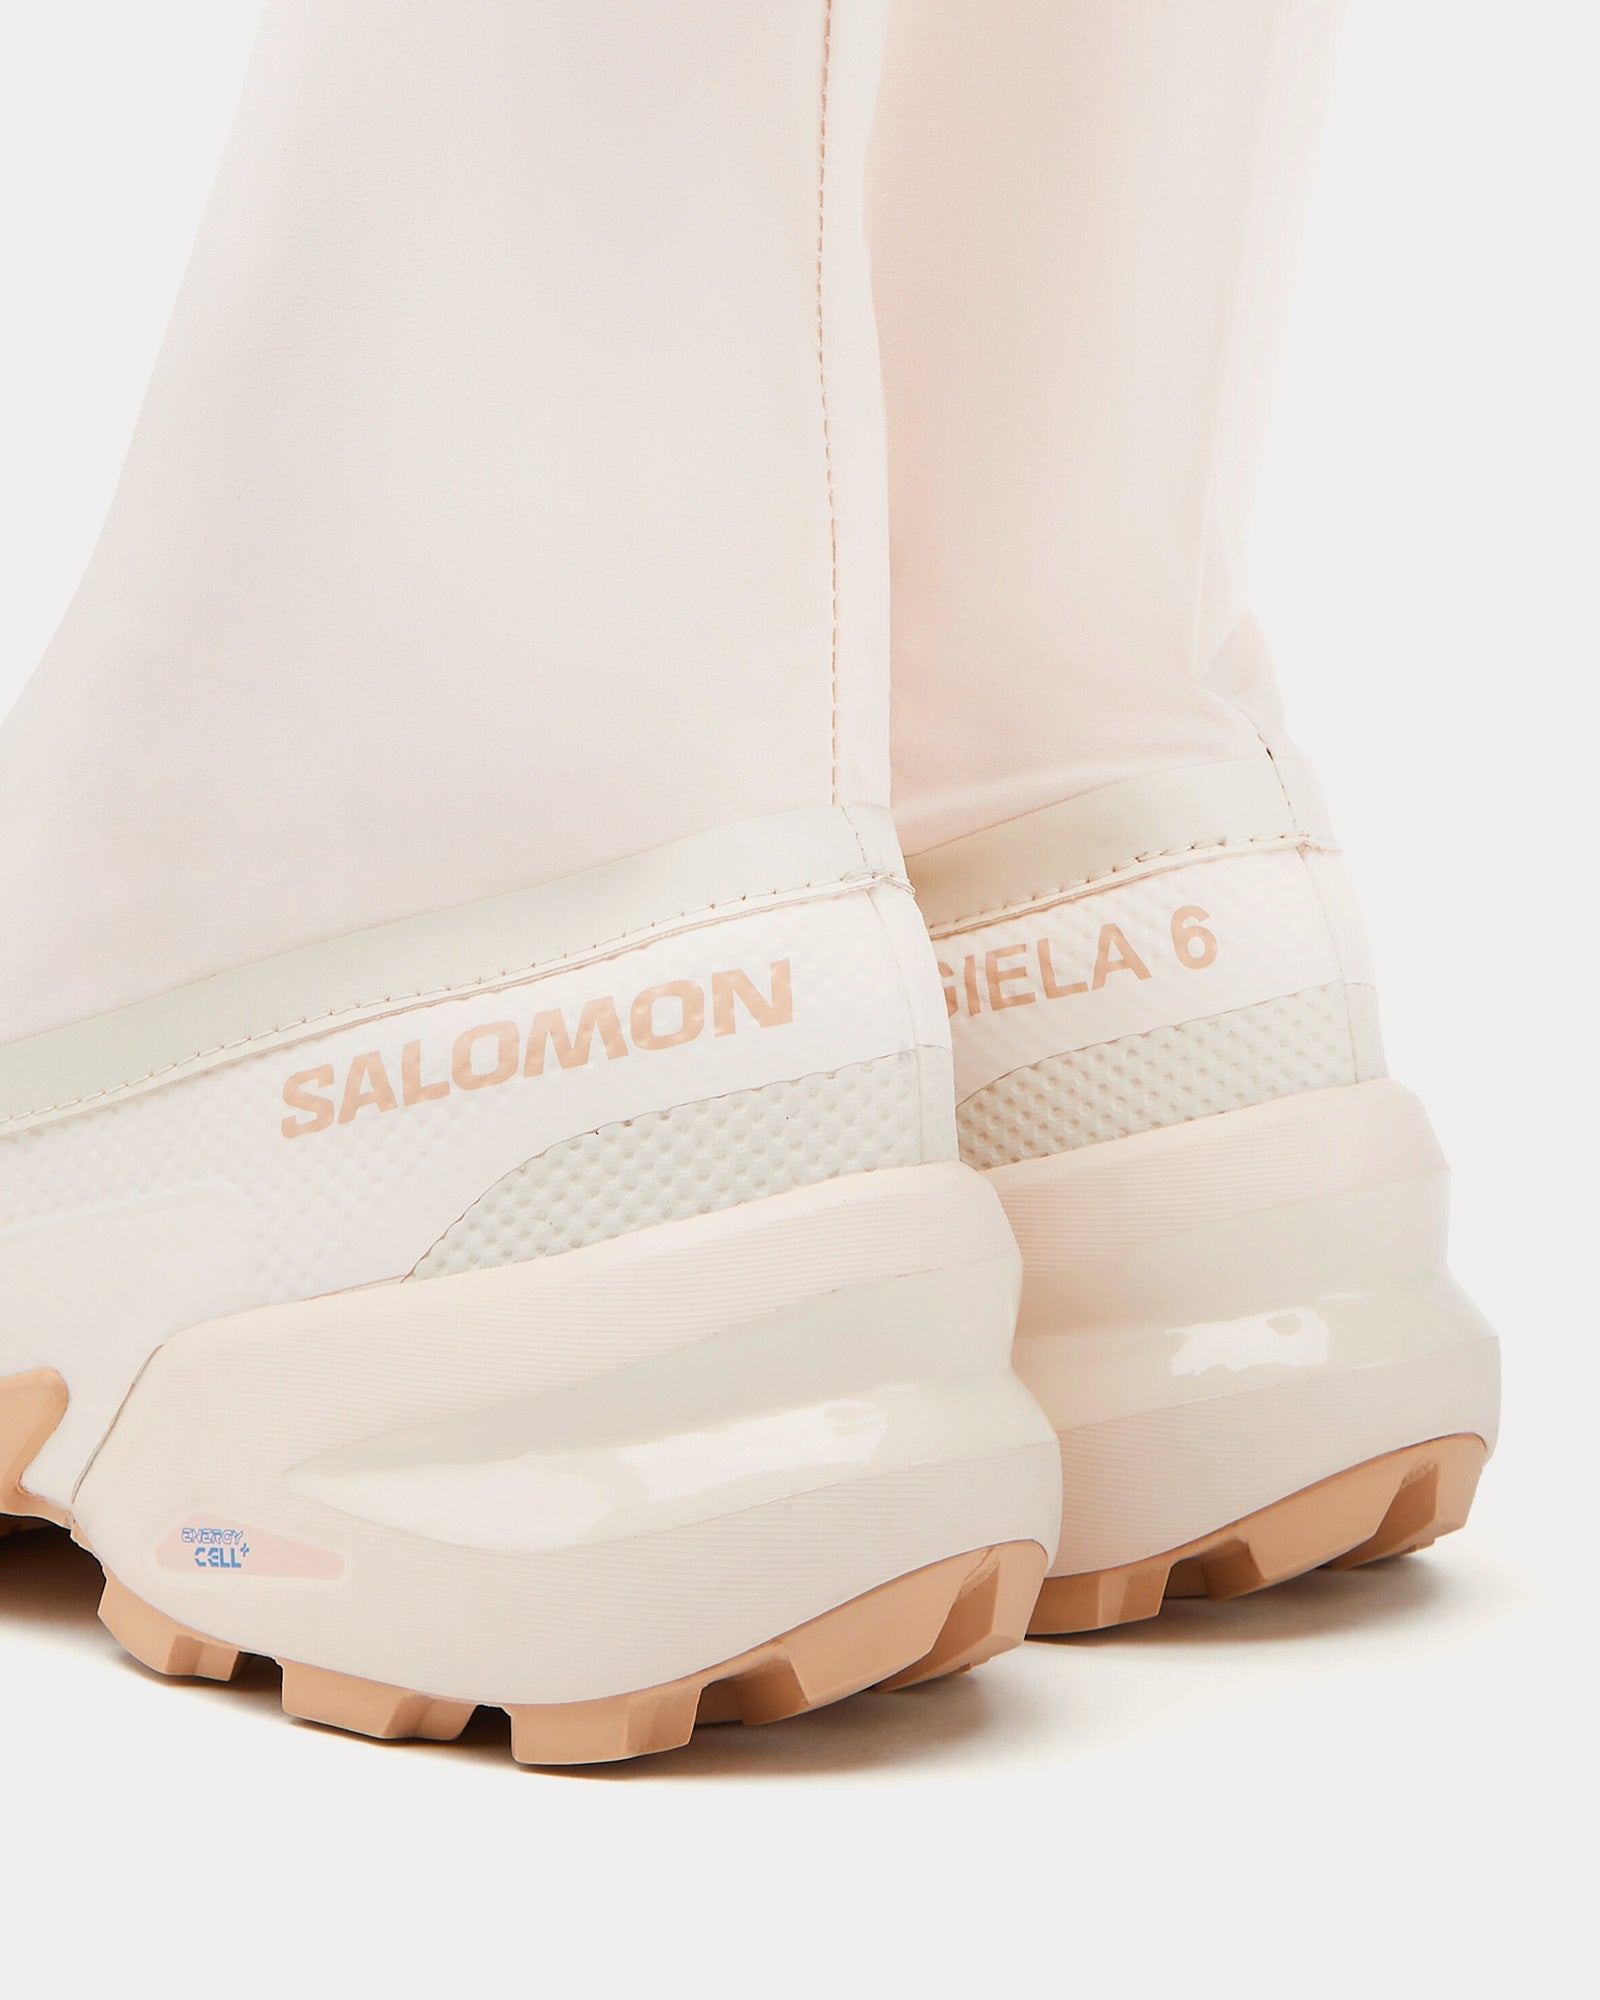 Salomon x MM6 Maison Margiela - Thigh High Dirty Wash Boots